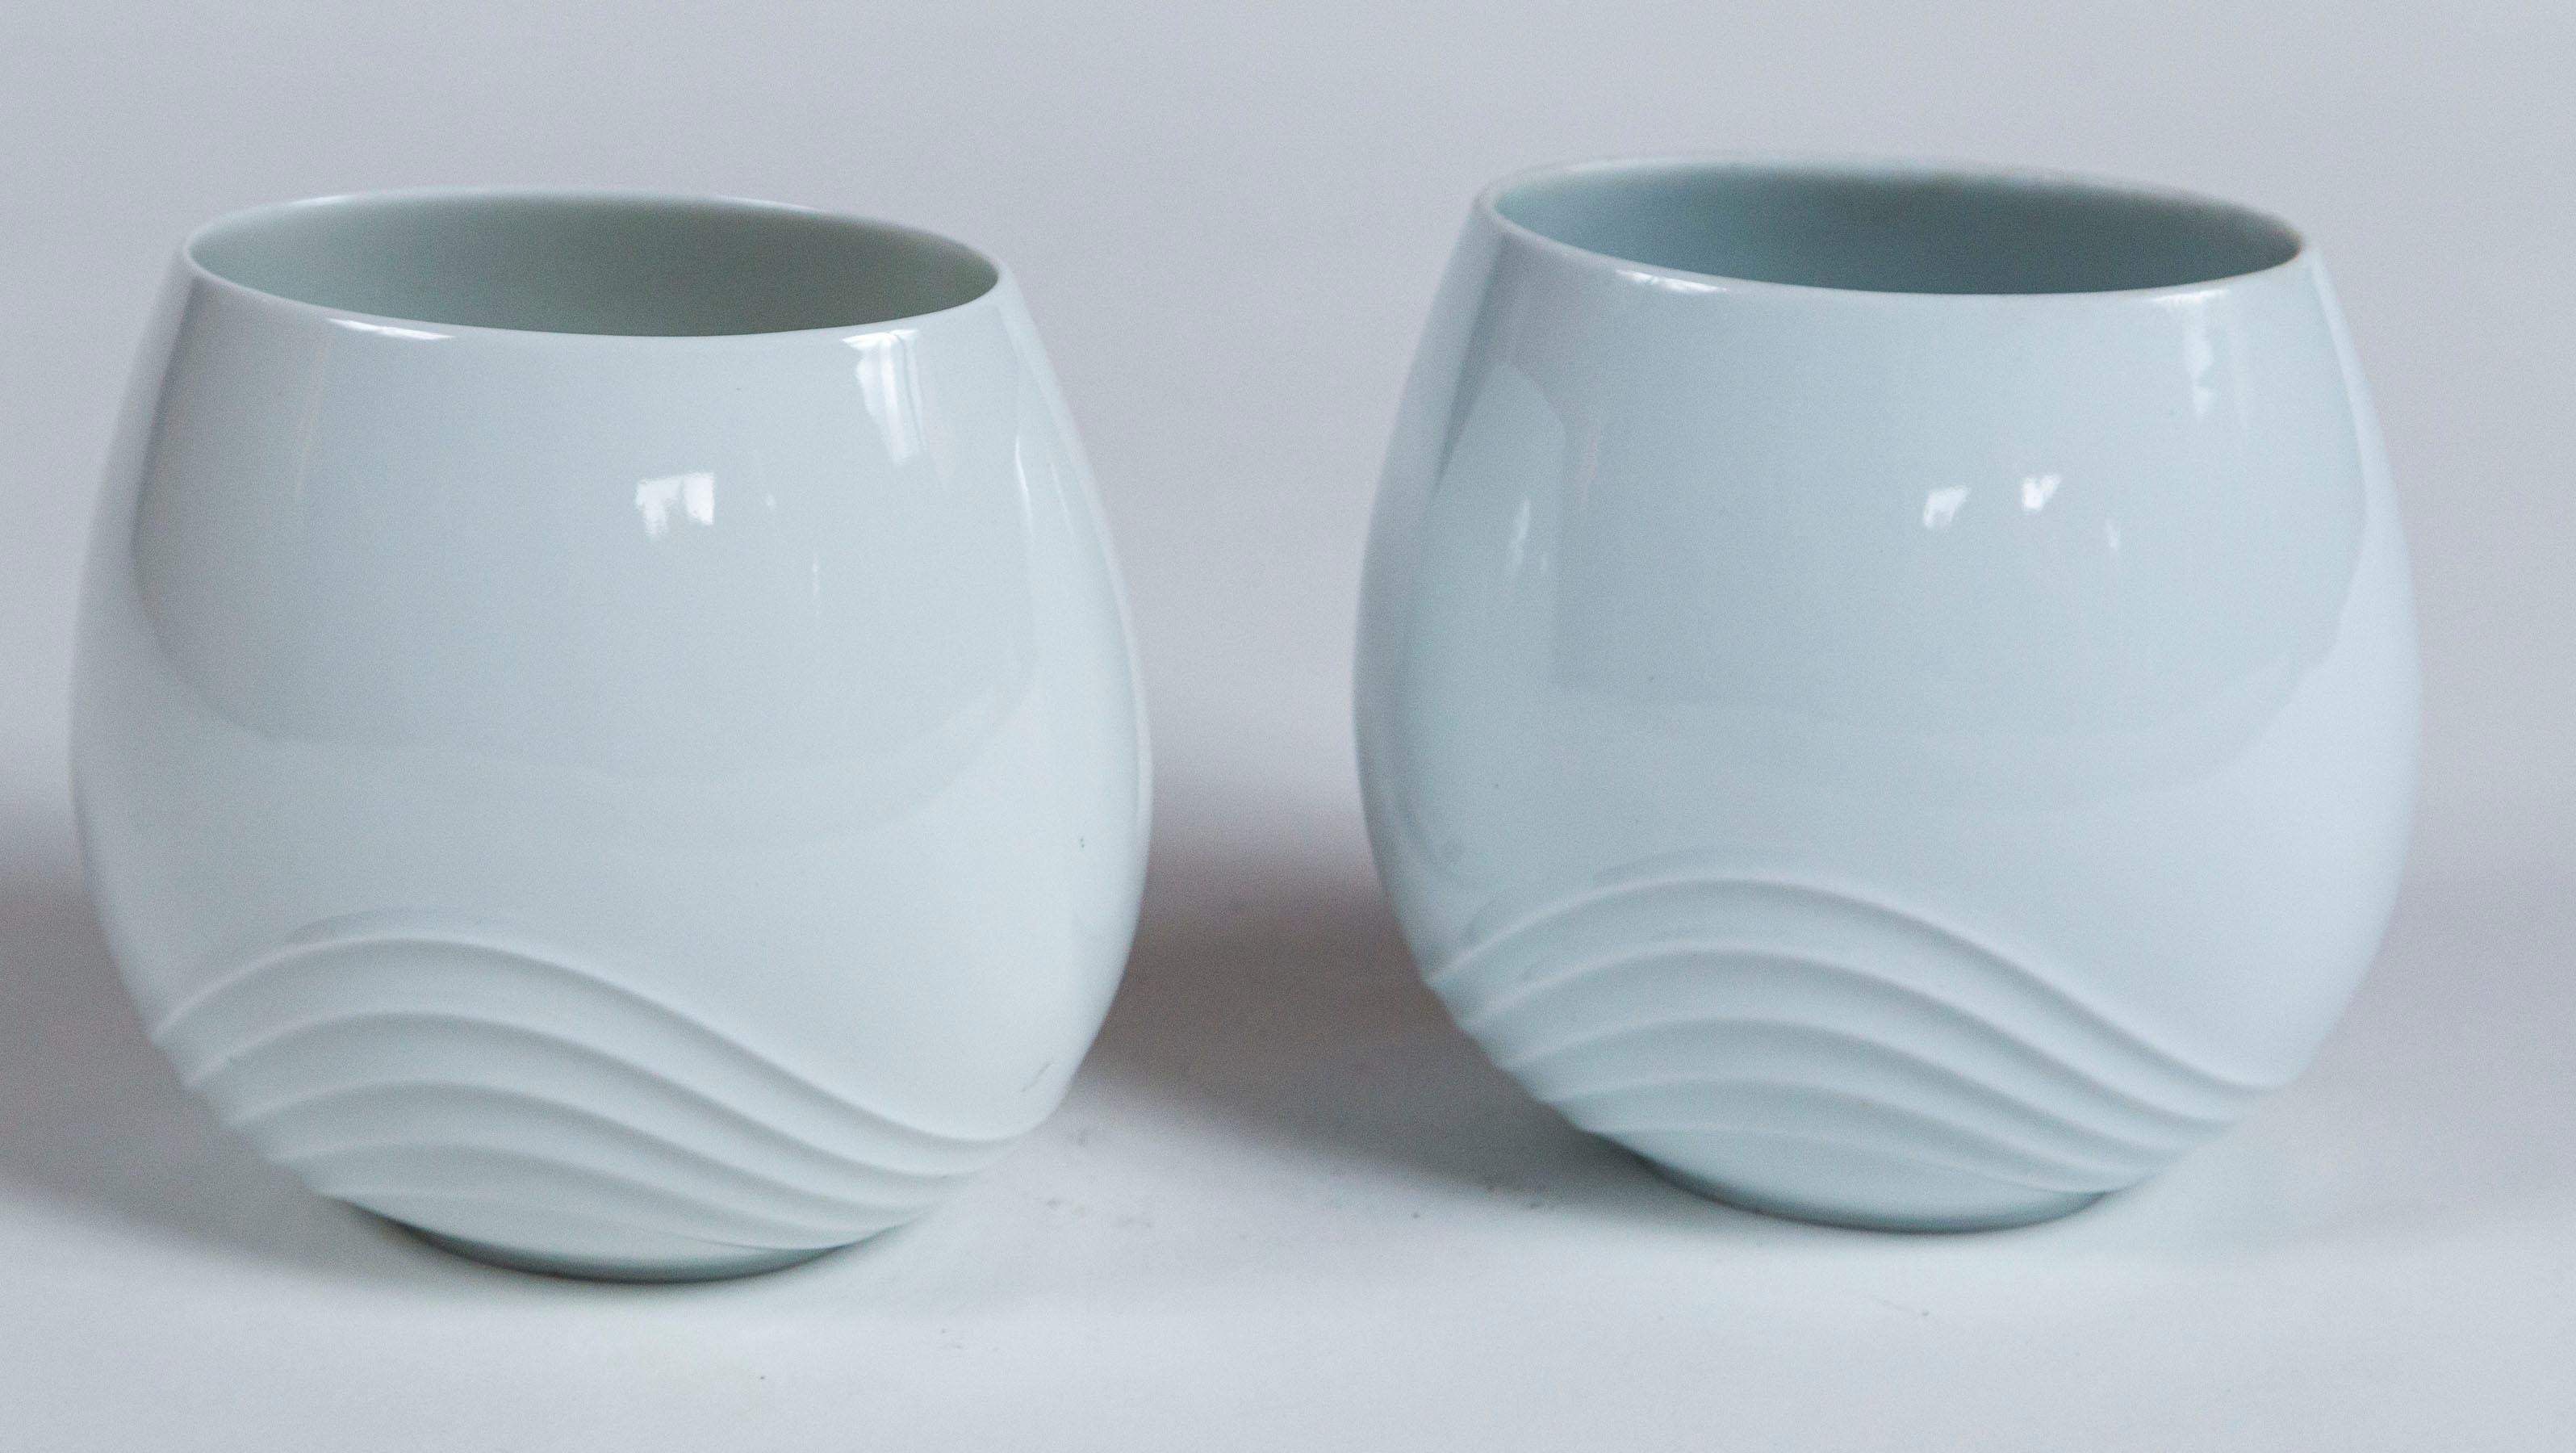 Pair Rosamonde Nairac vases for Rosenthal, circa 1960's. White porcelain with raised, wavy pattern.